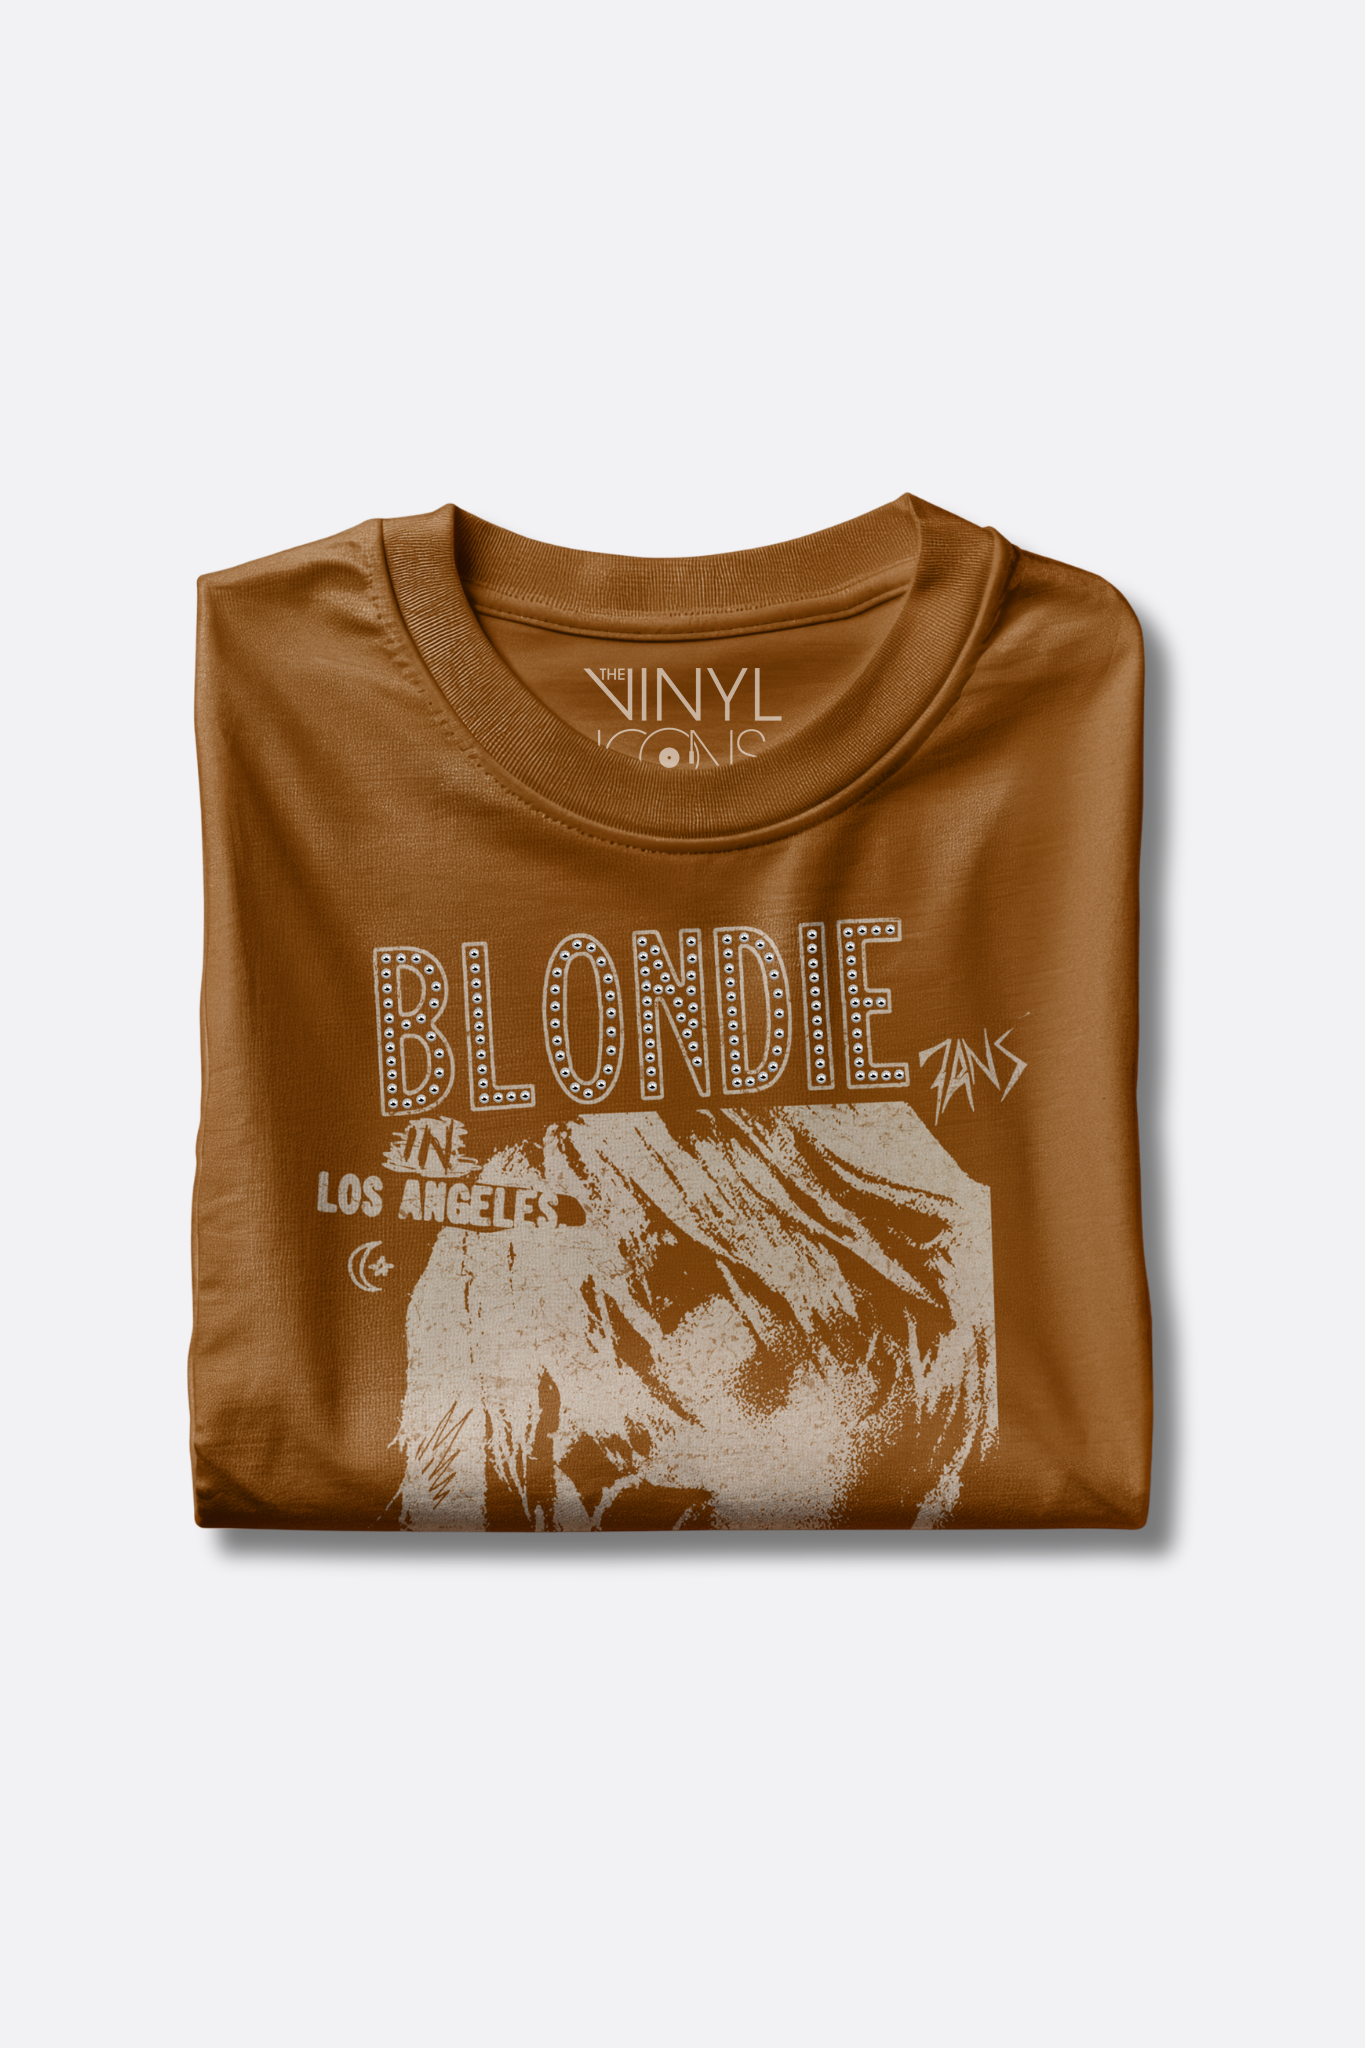 Blondie Studded Brown T-Shirt